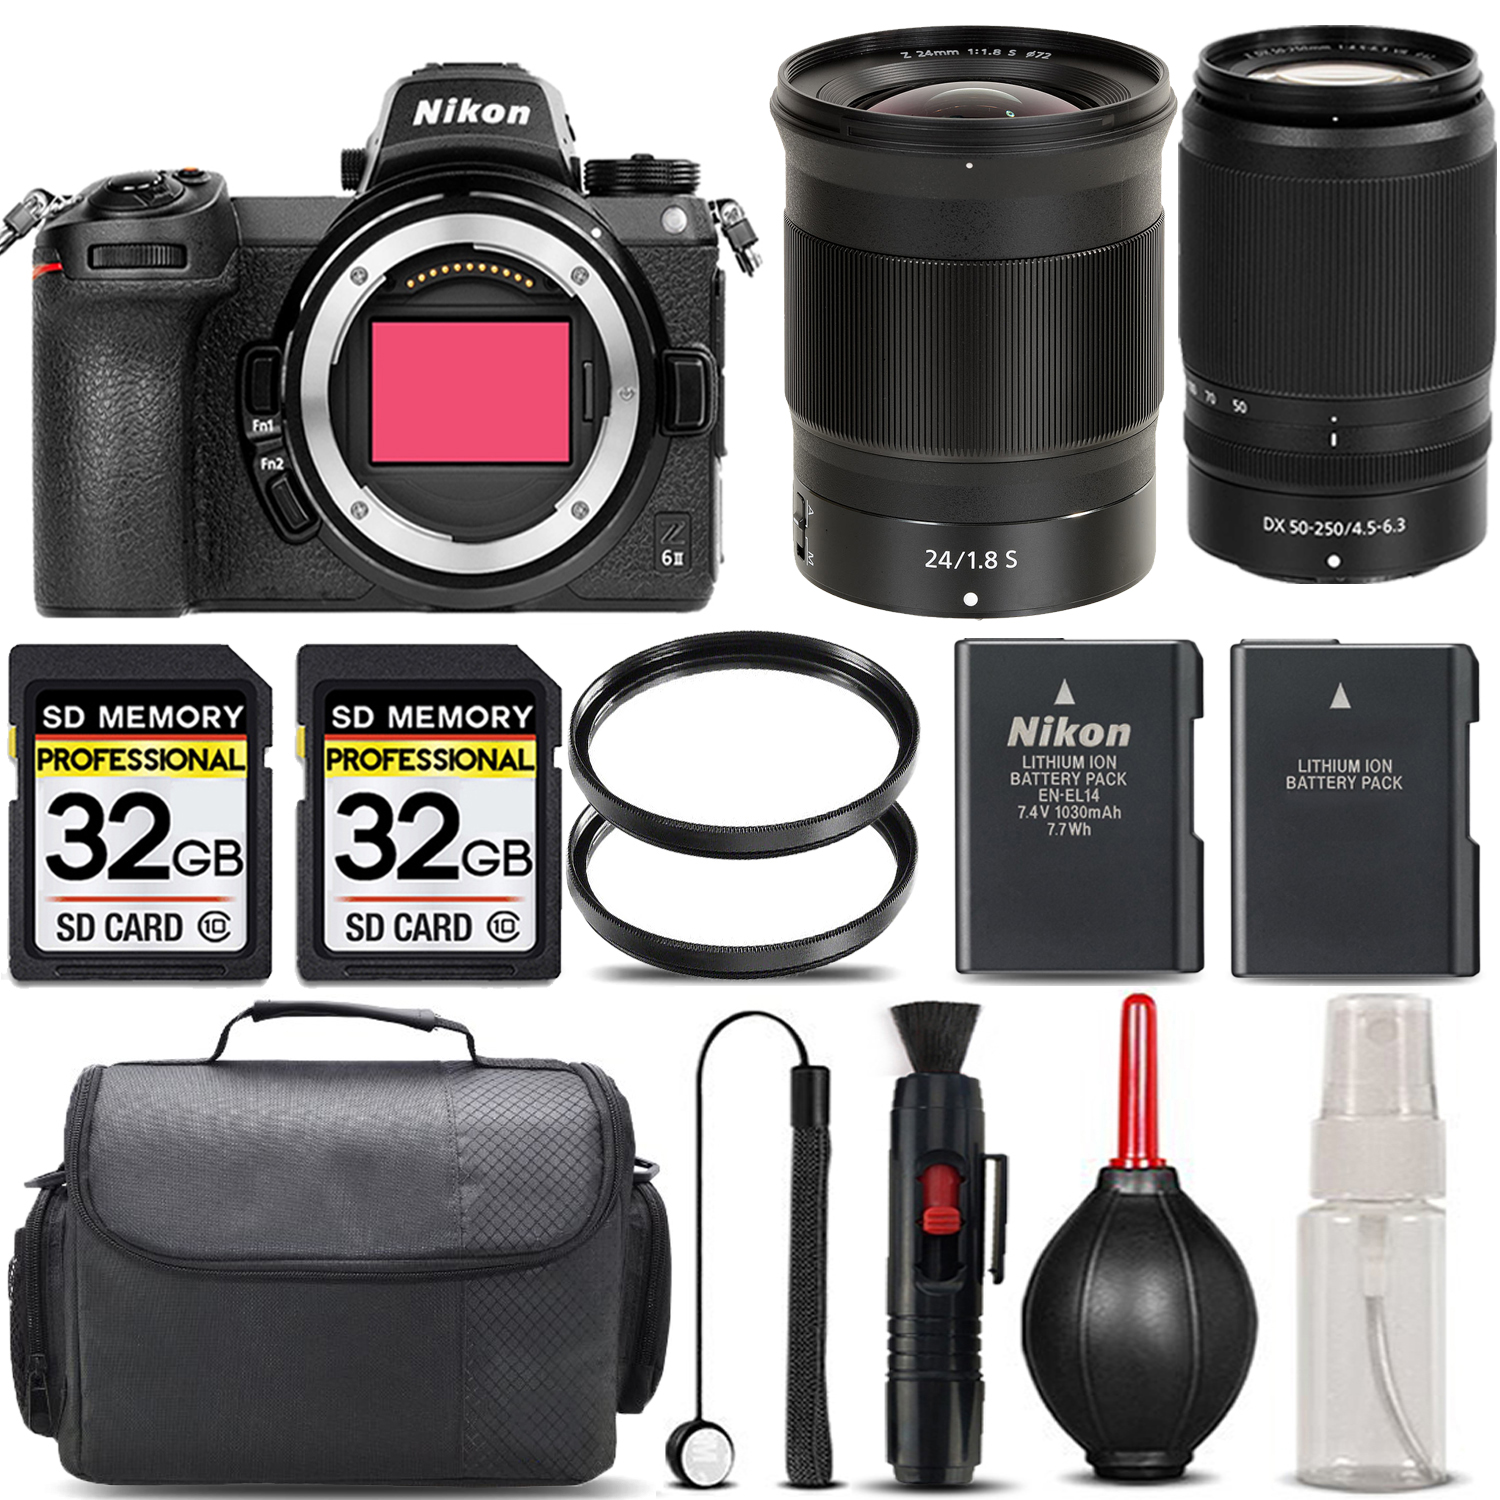 Z6 II + 50-250mm f/4.5-6.3 Lens + 24mm f/1.8 S Lens + Handbag - SAVE BIG KIT *FREE SHIPPING*